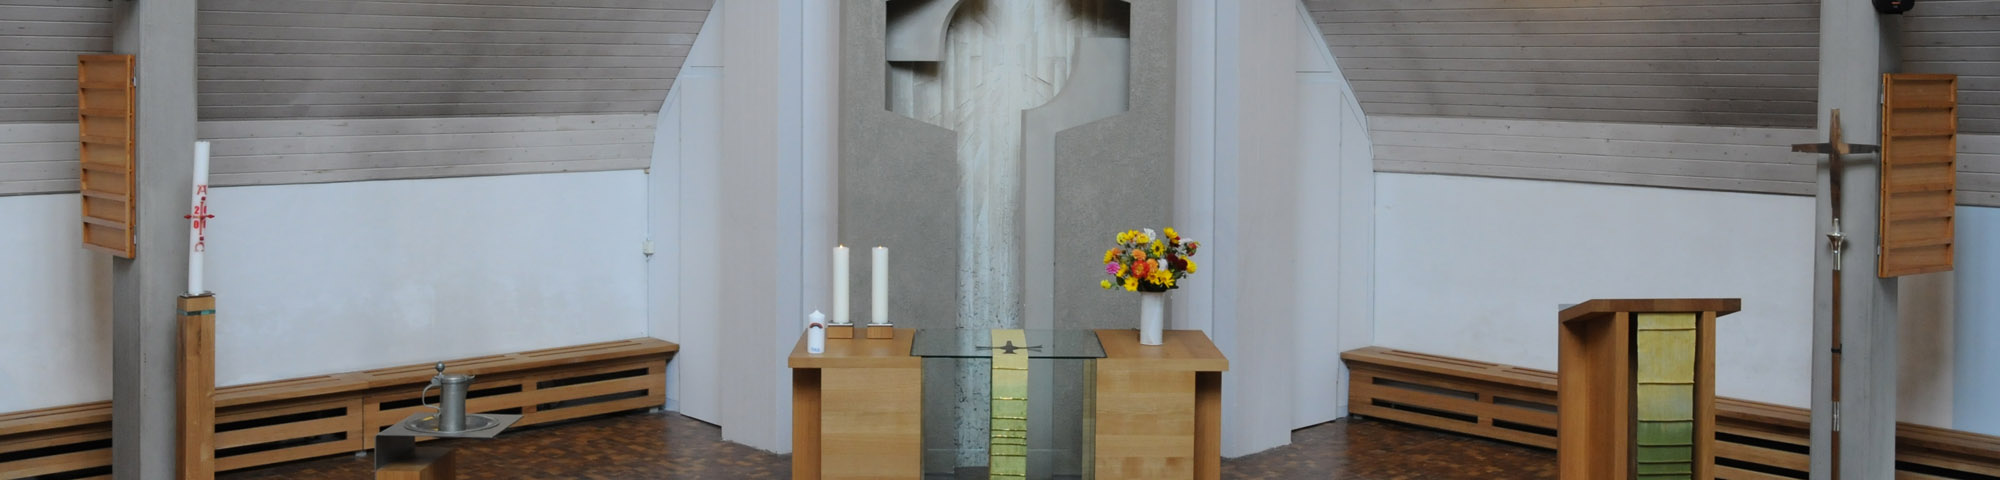 Altar der Pauluskirche Grünau